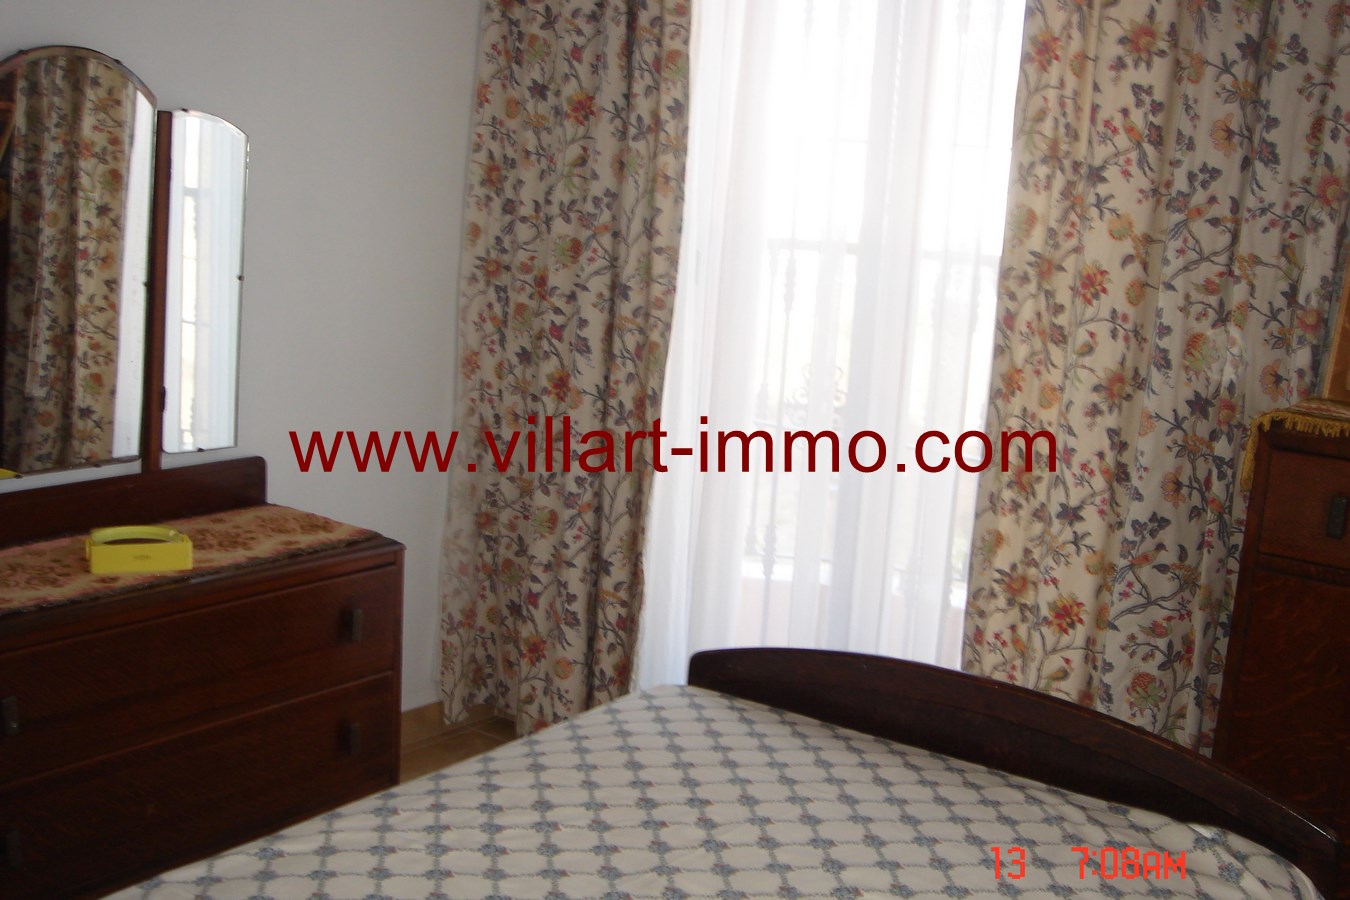 4-a-vendre-villa-tanger-hijriyin-chambre-vv430-villart-immo